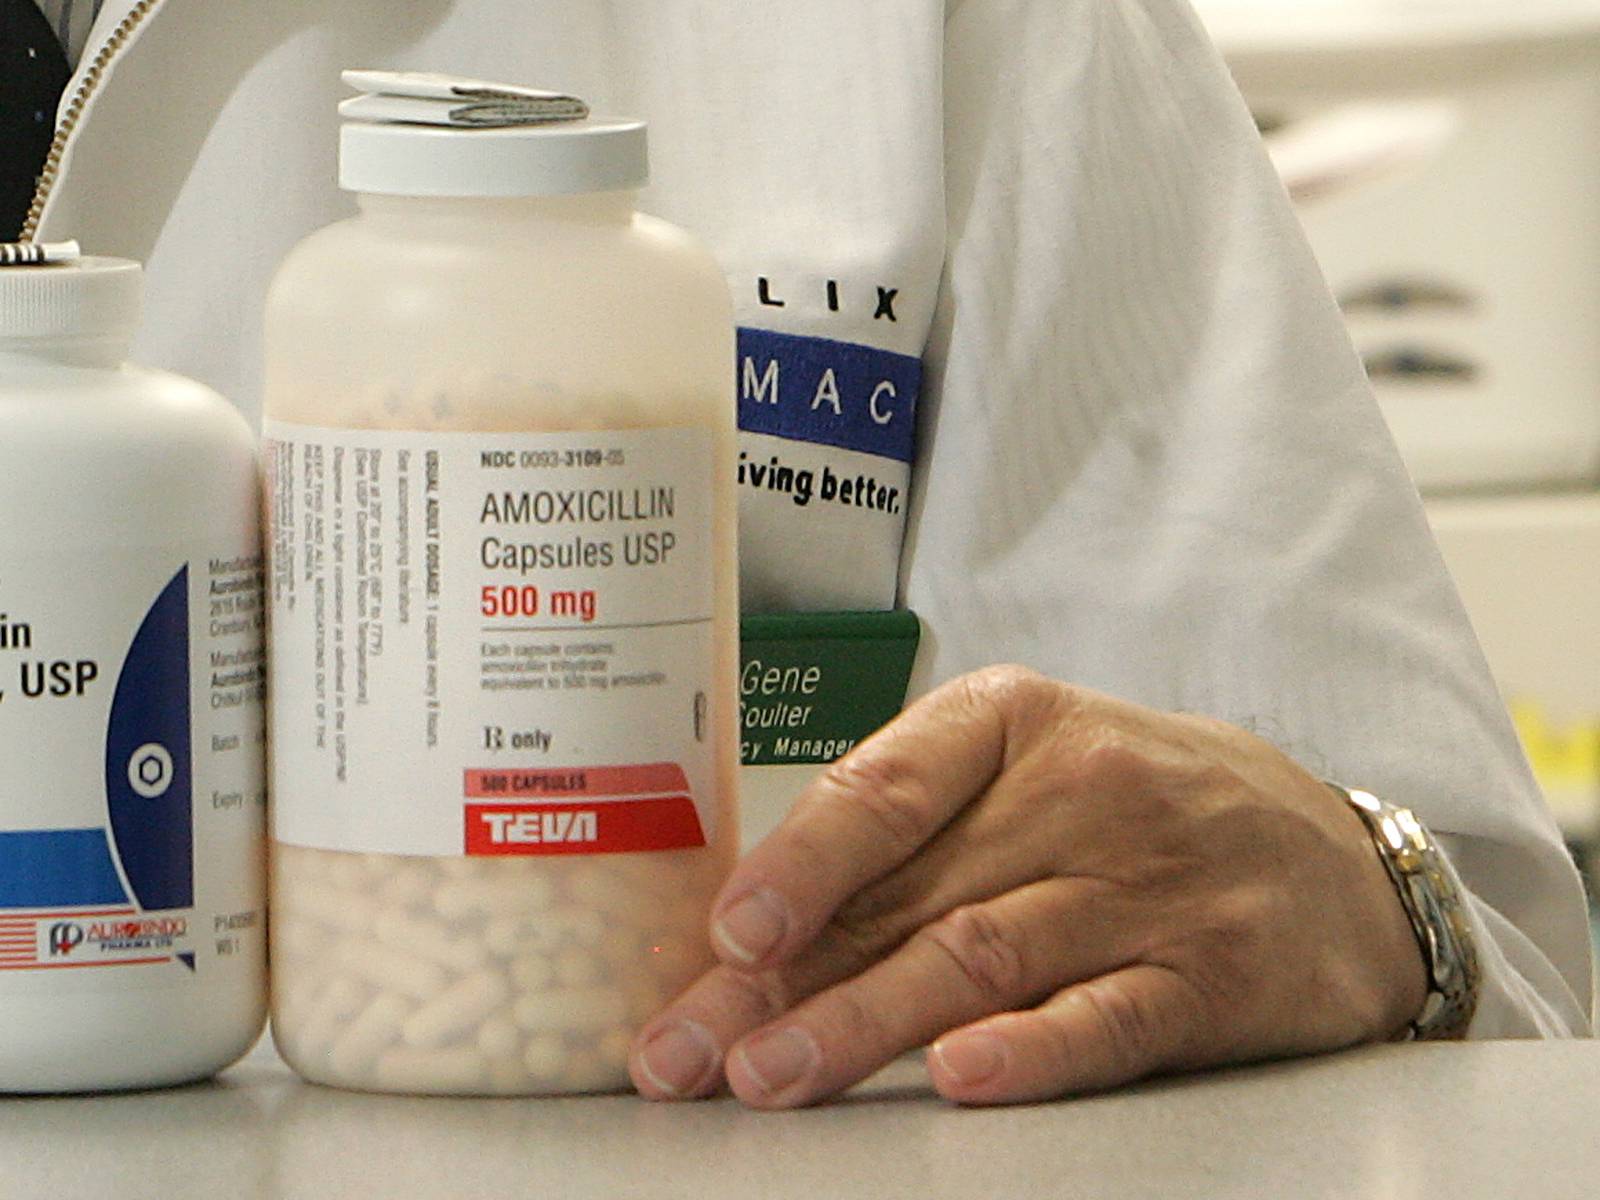 Amoxicillin shortage hits northern Illinois Shaw Local